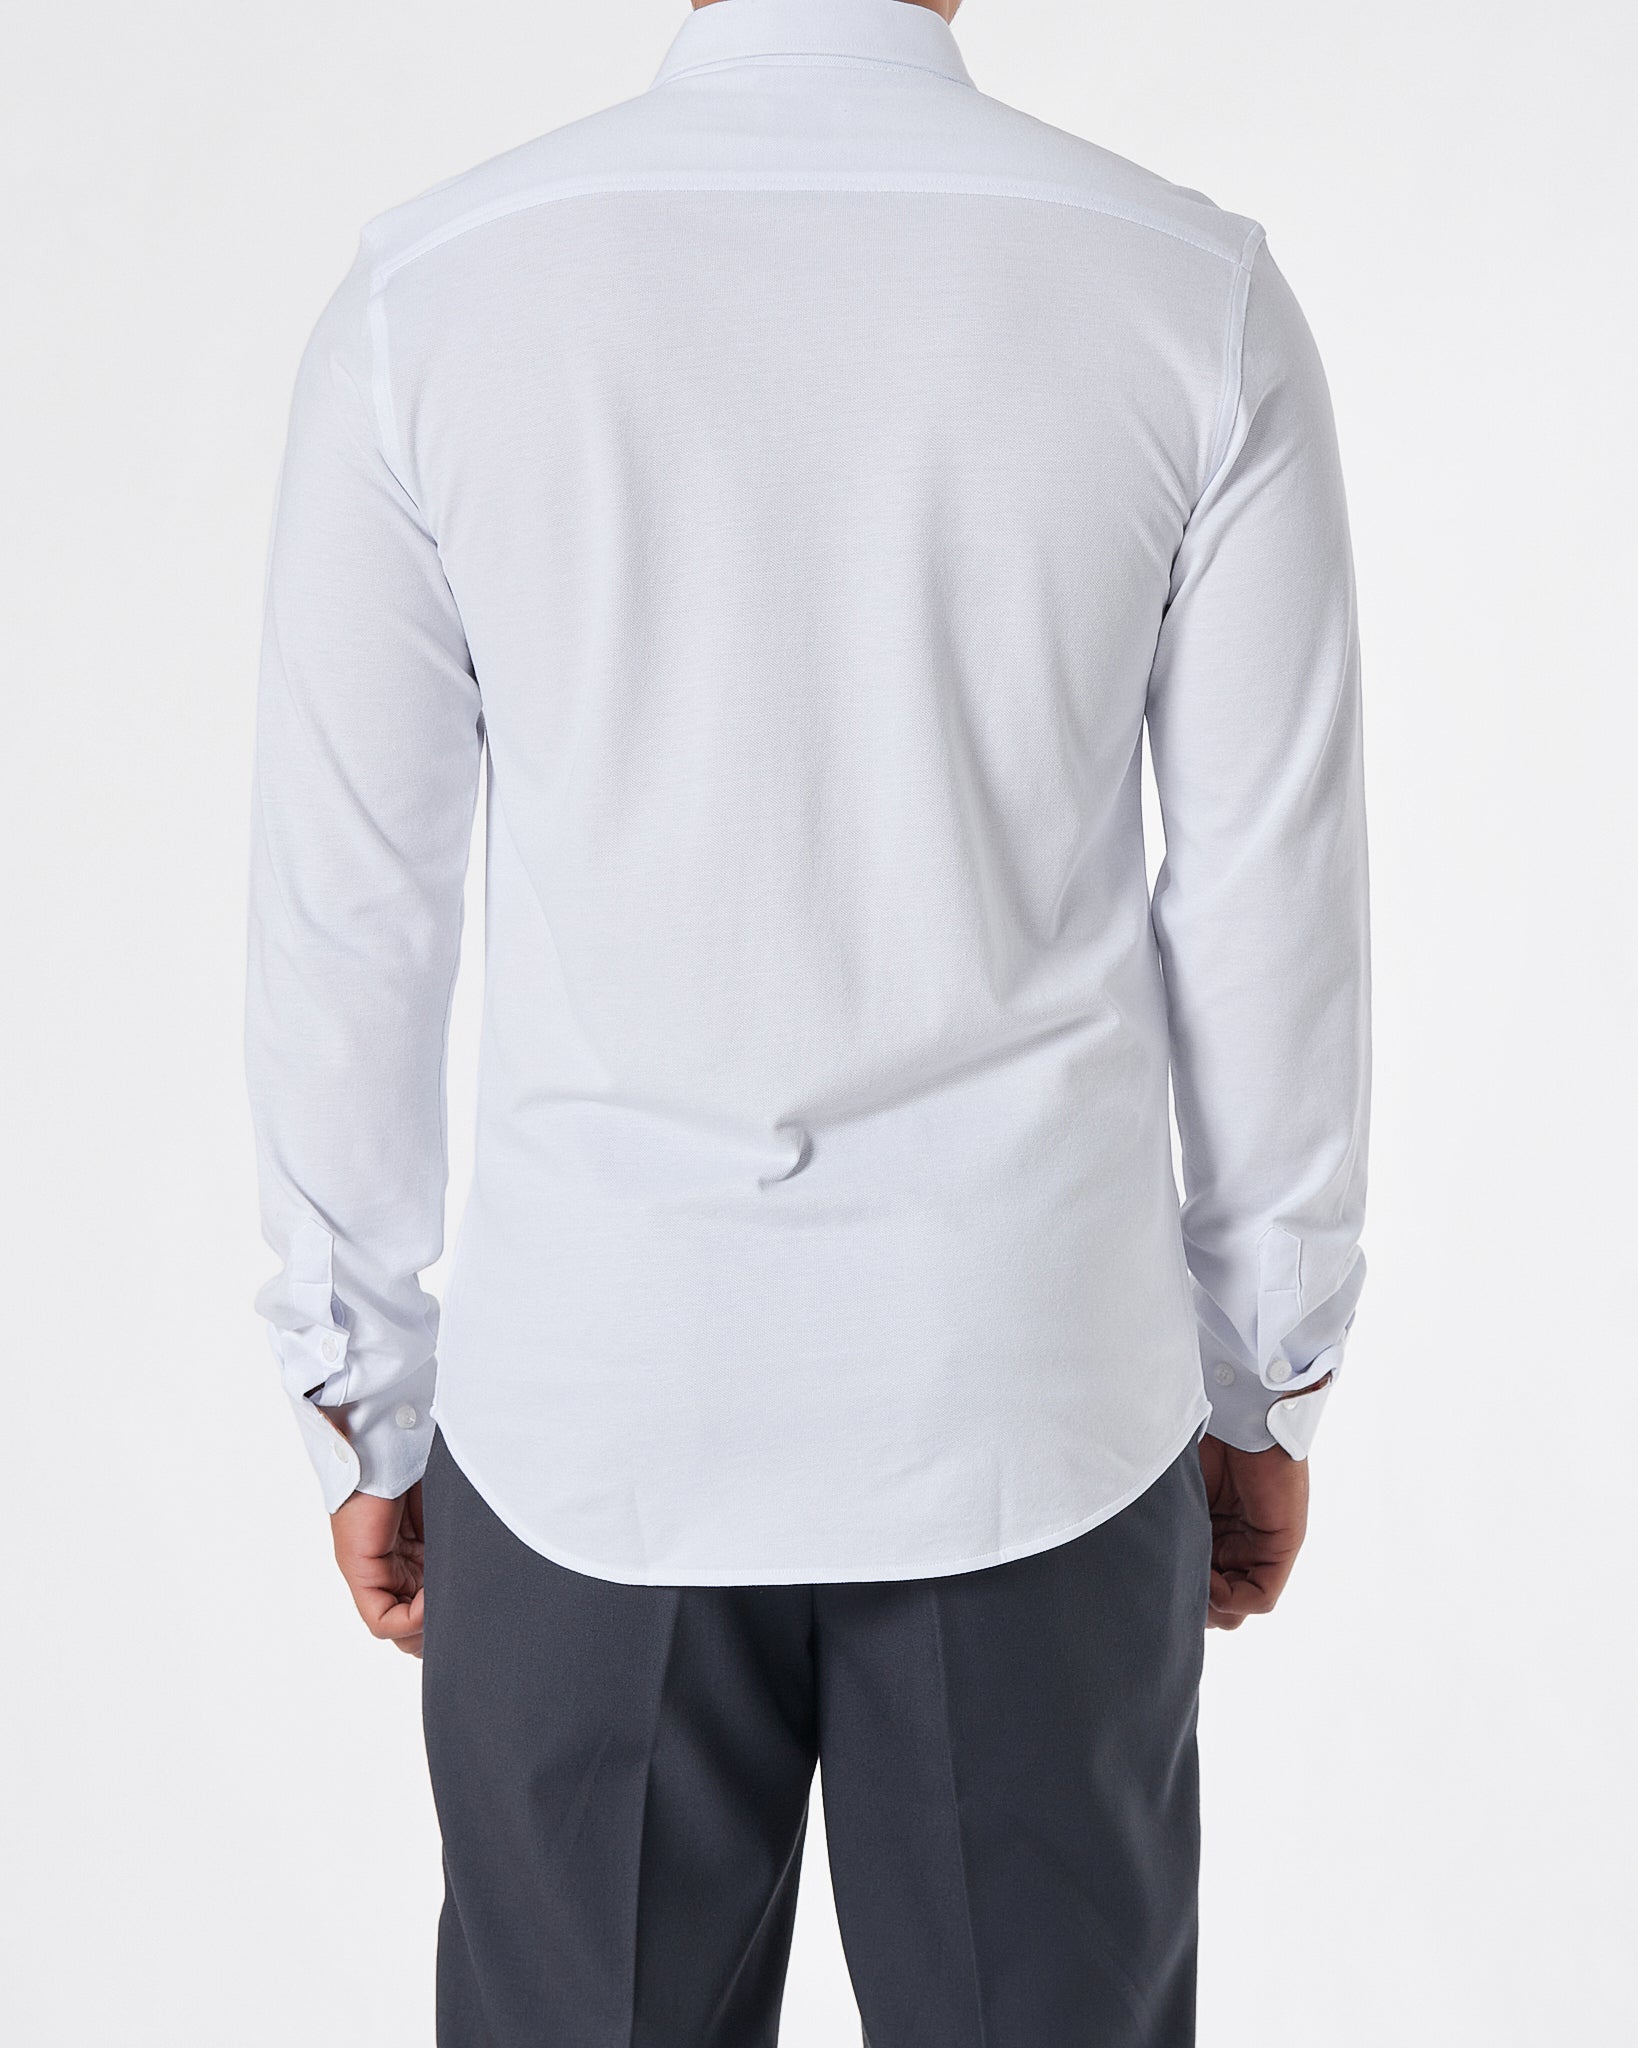 BUR Logo Embroidered Men White Shirts Long Sleeve 25.90